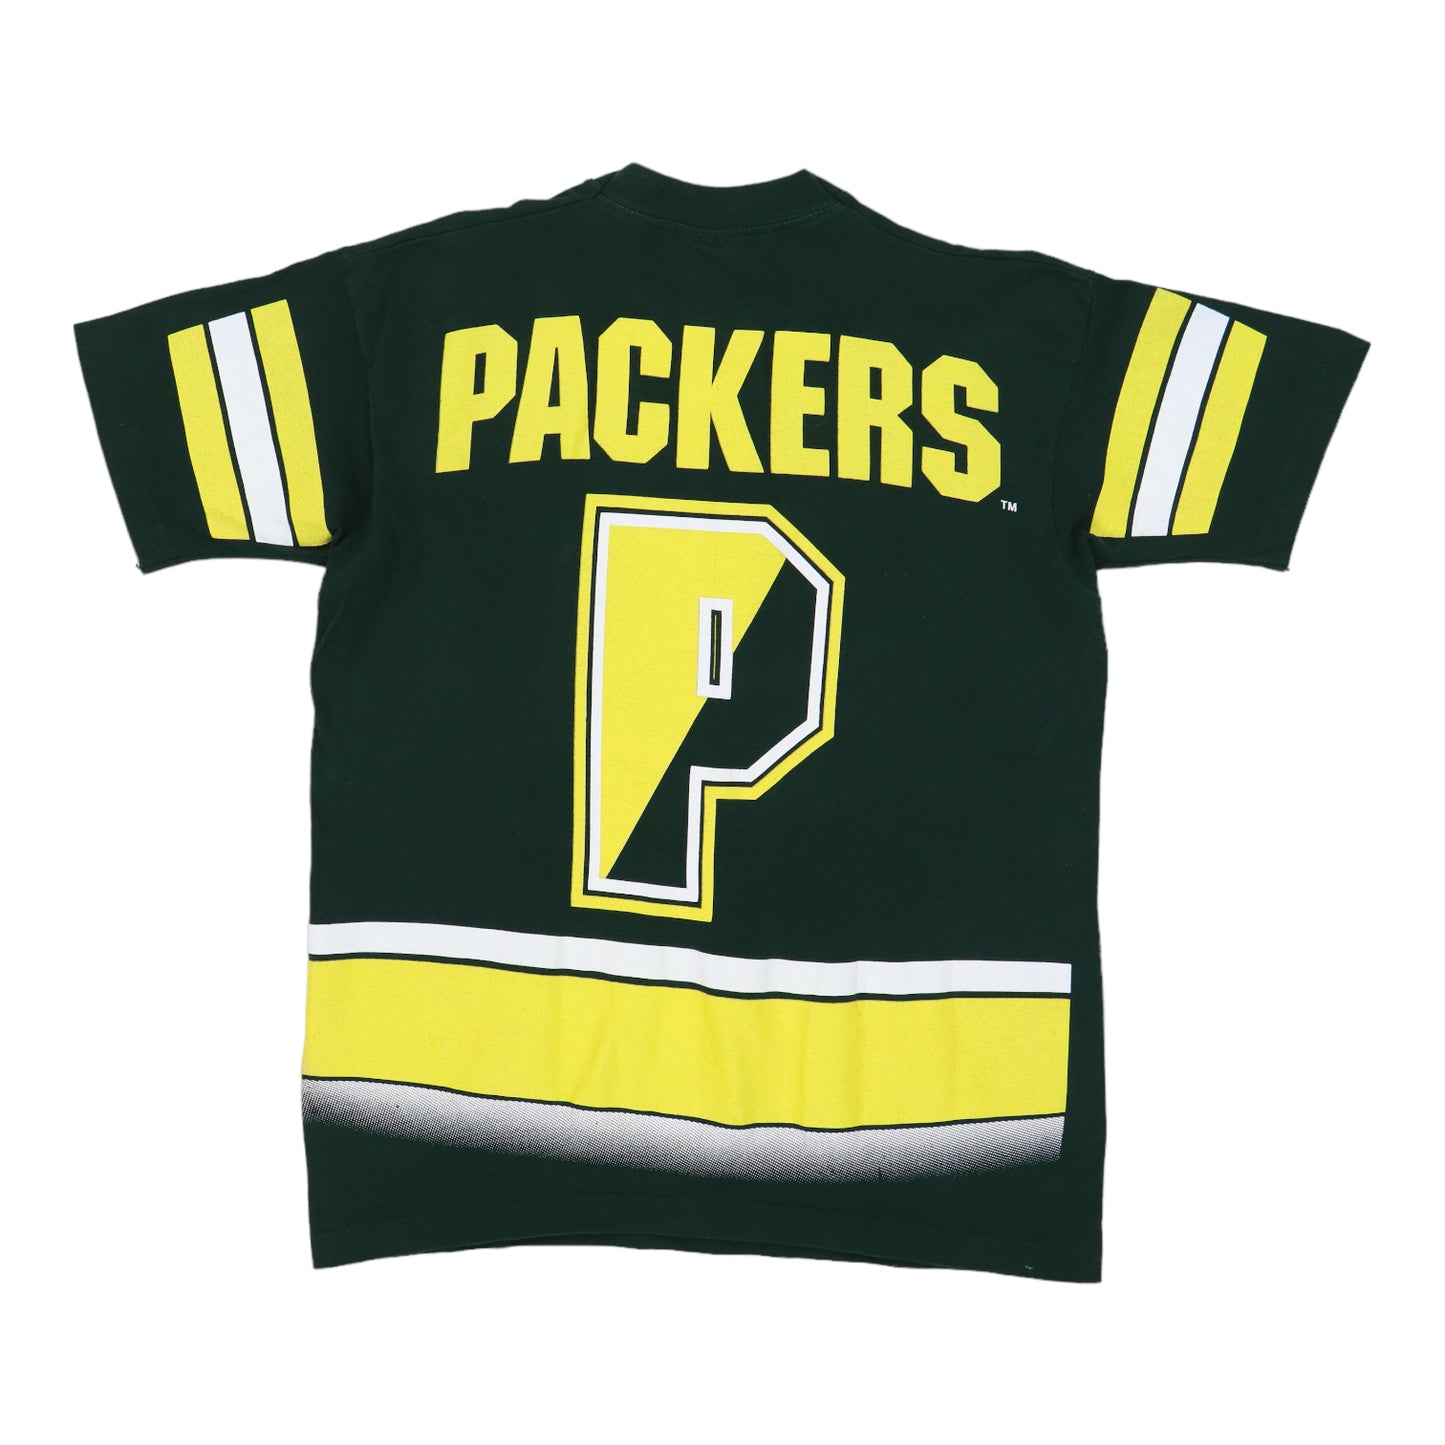 1994 Green Bay Packers Jersey Shirt